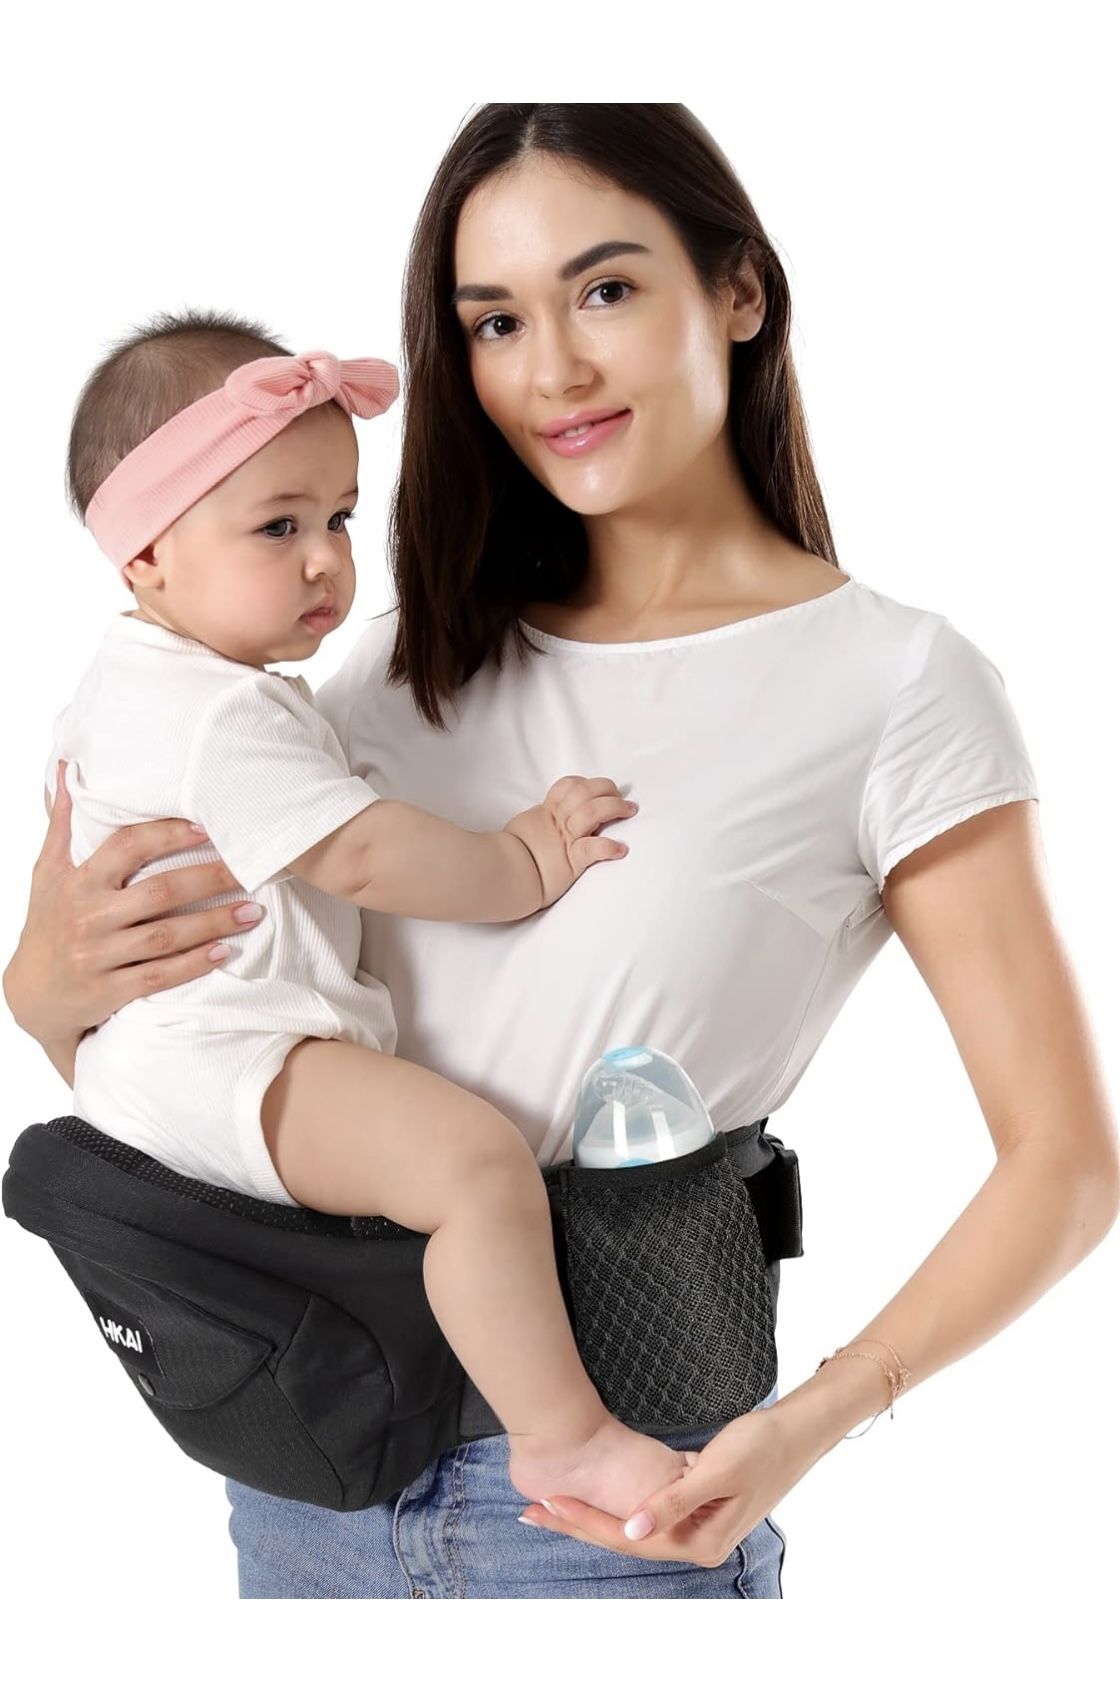 HKAI Baby carrier, Hip seat 